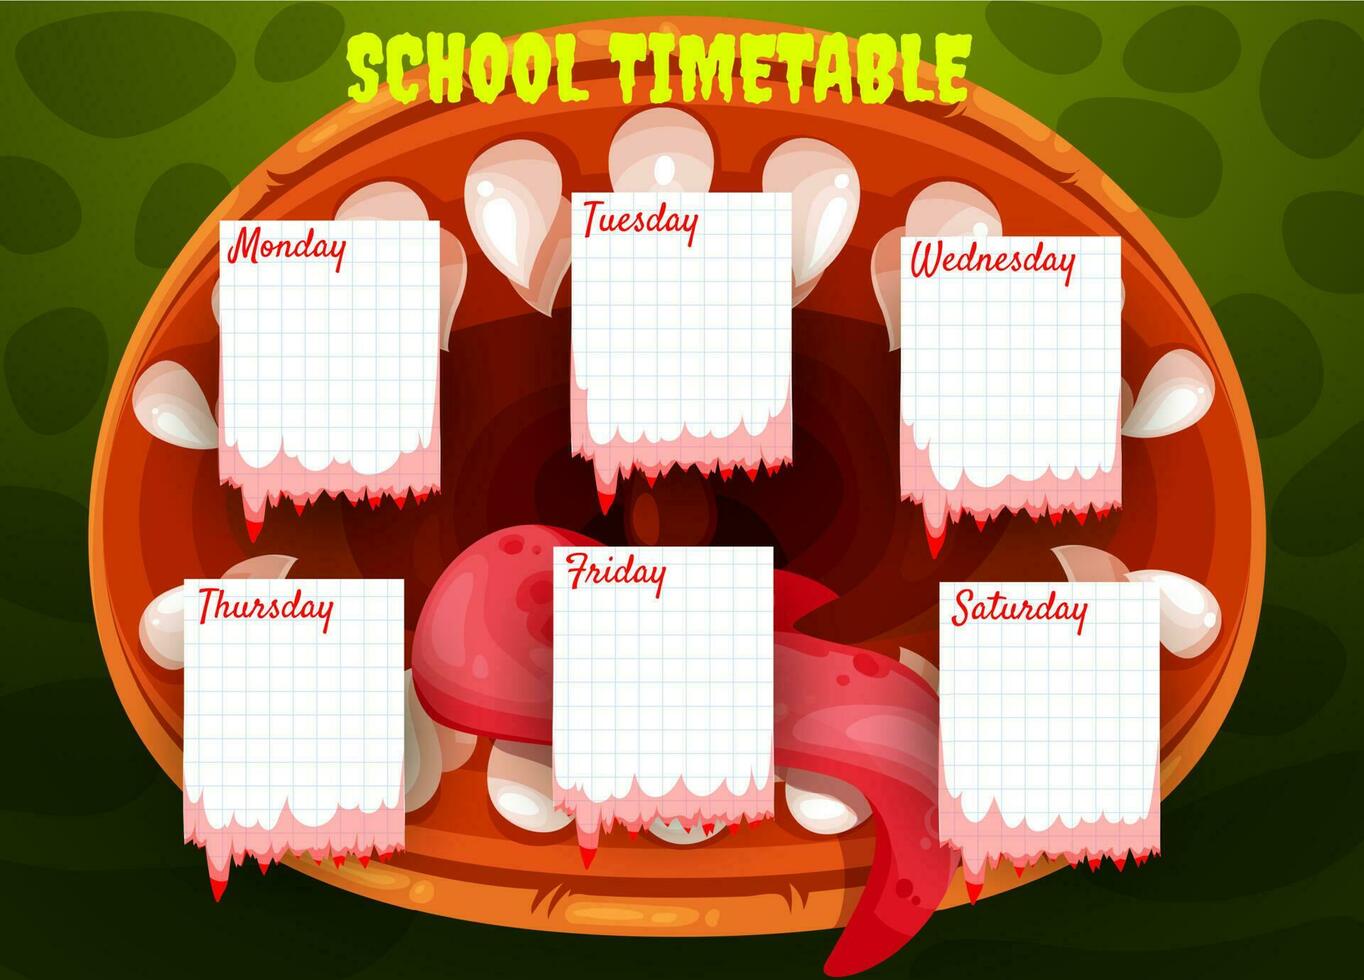 School timetable template with Halloween monster vector